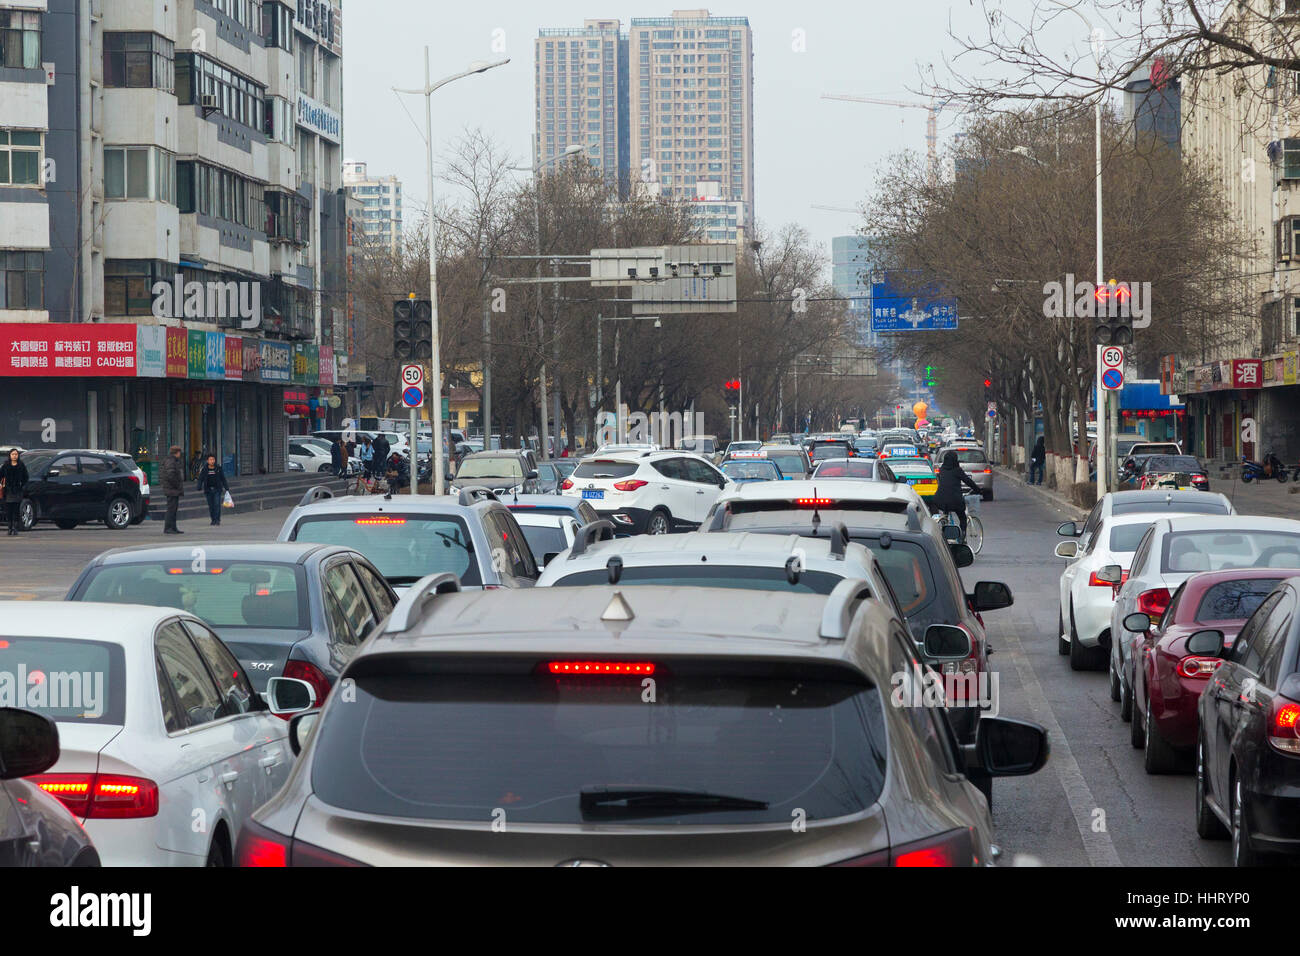 Traffic jam, Wuzhong, Ningxia province, China Stock Photo